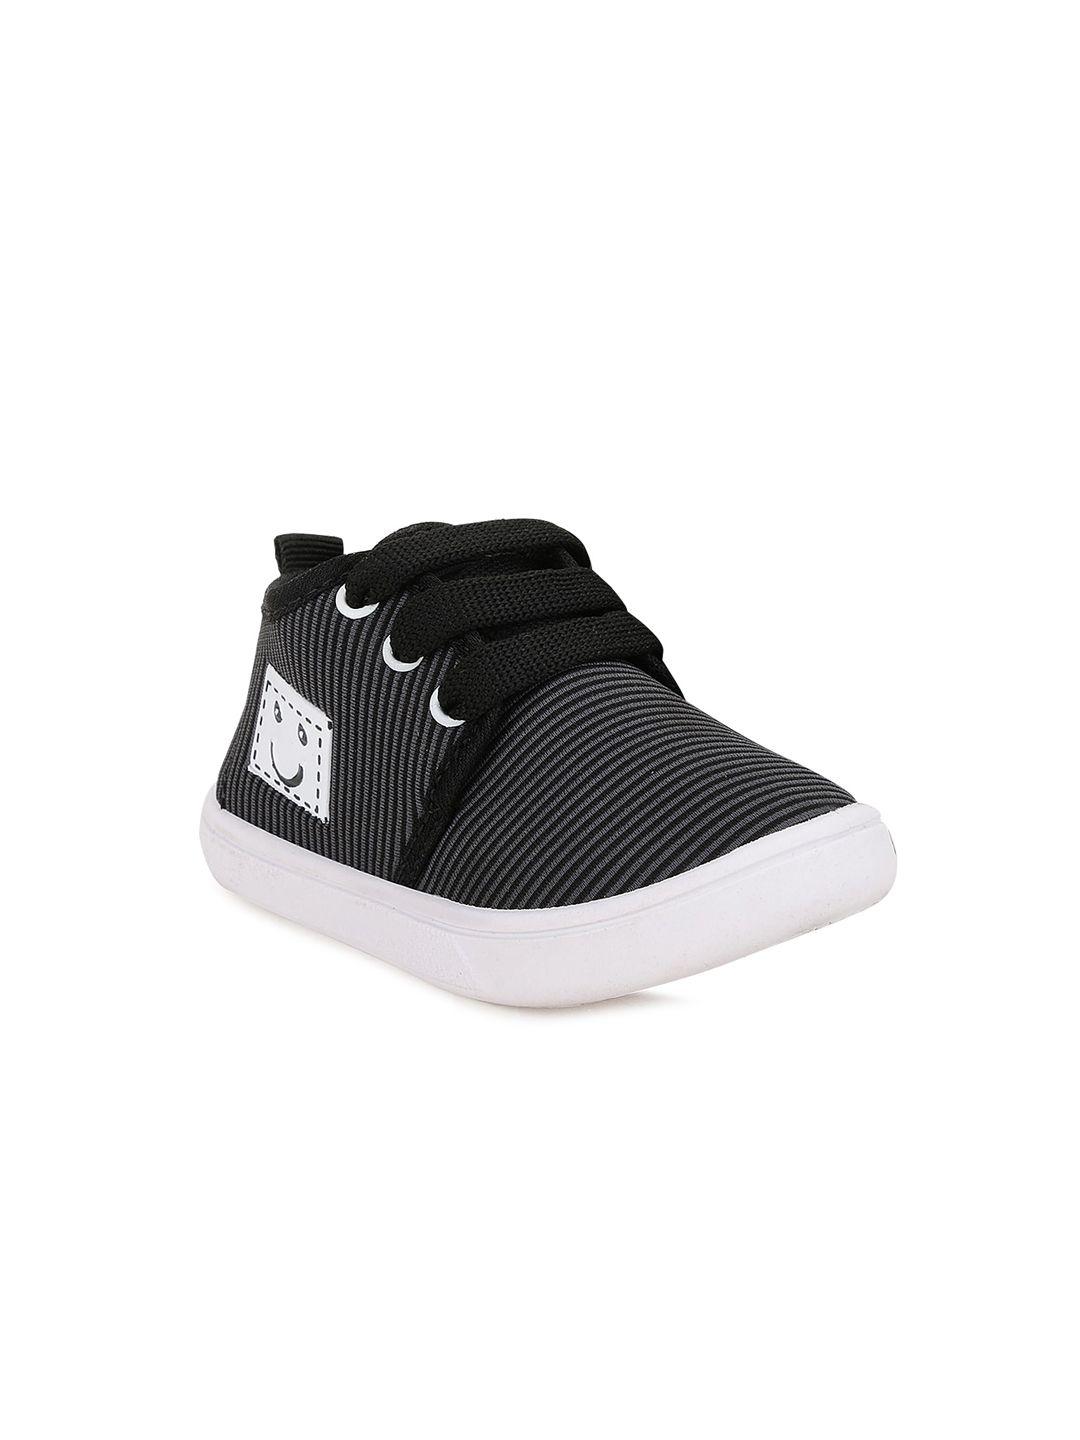 neobaby kids grey & black striped lightweight sneakers